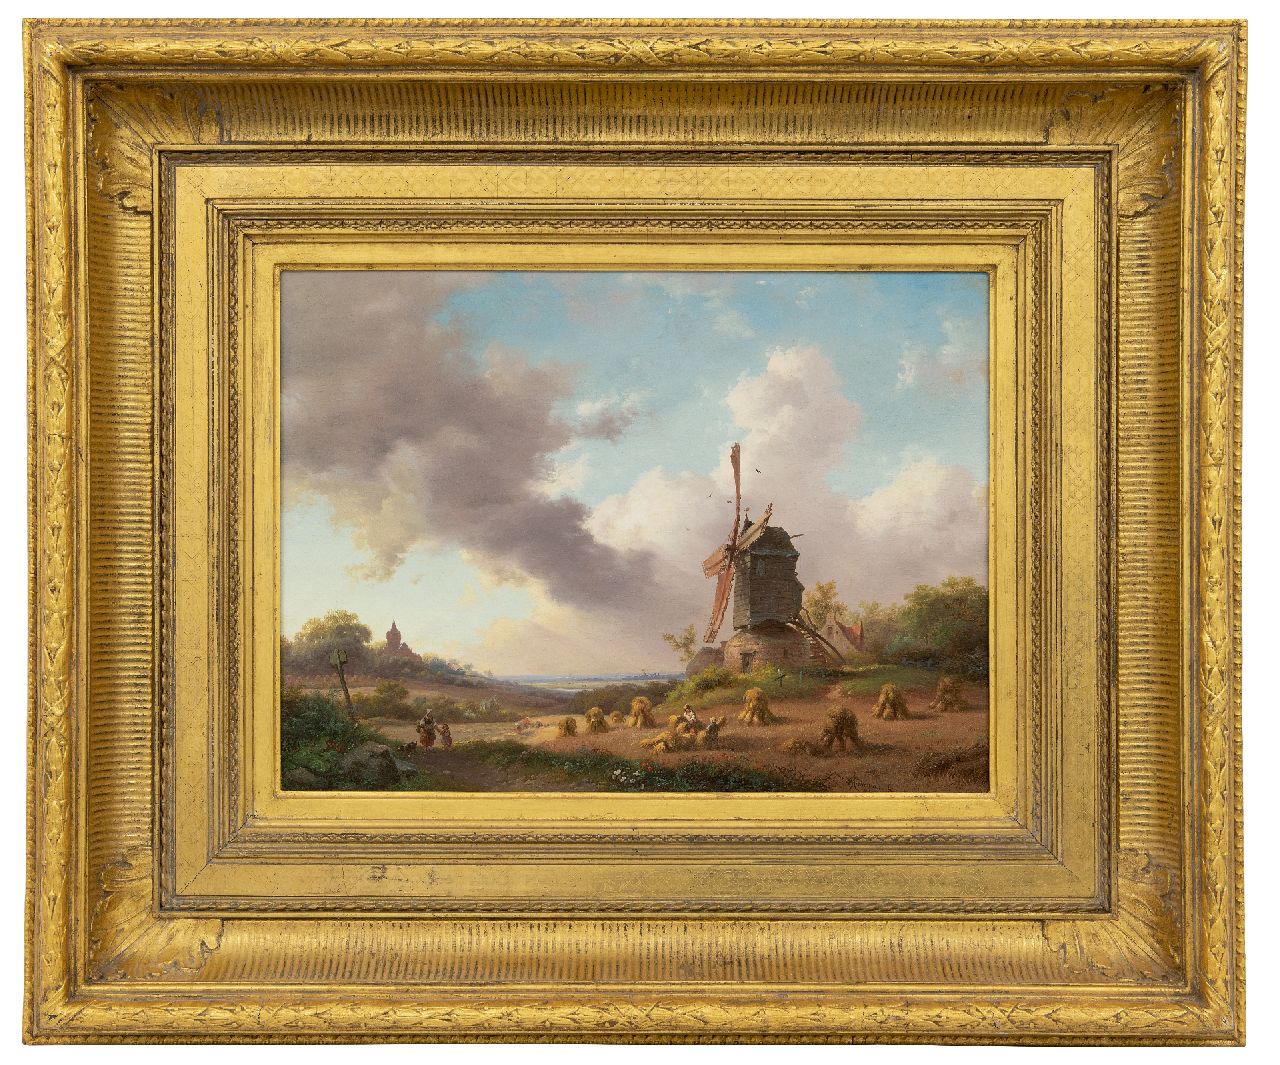 Kruseman F.M.  | Frederik Marinus Kruseman, Harvest month, August, oil on panel 28.5 x 38.5 cm, signed l.r. and dated 1850